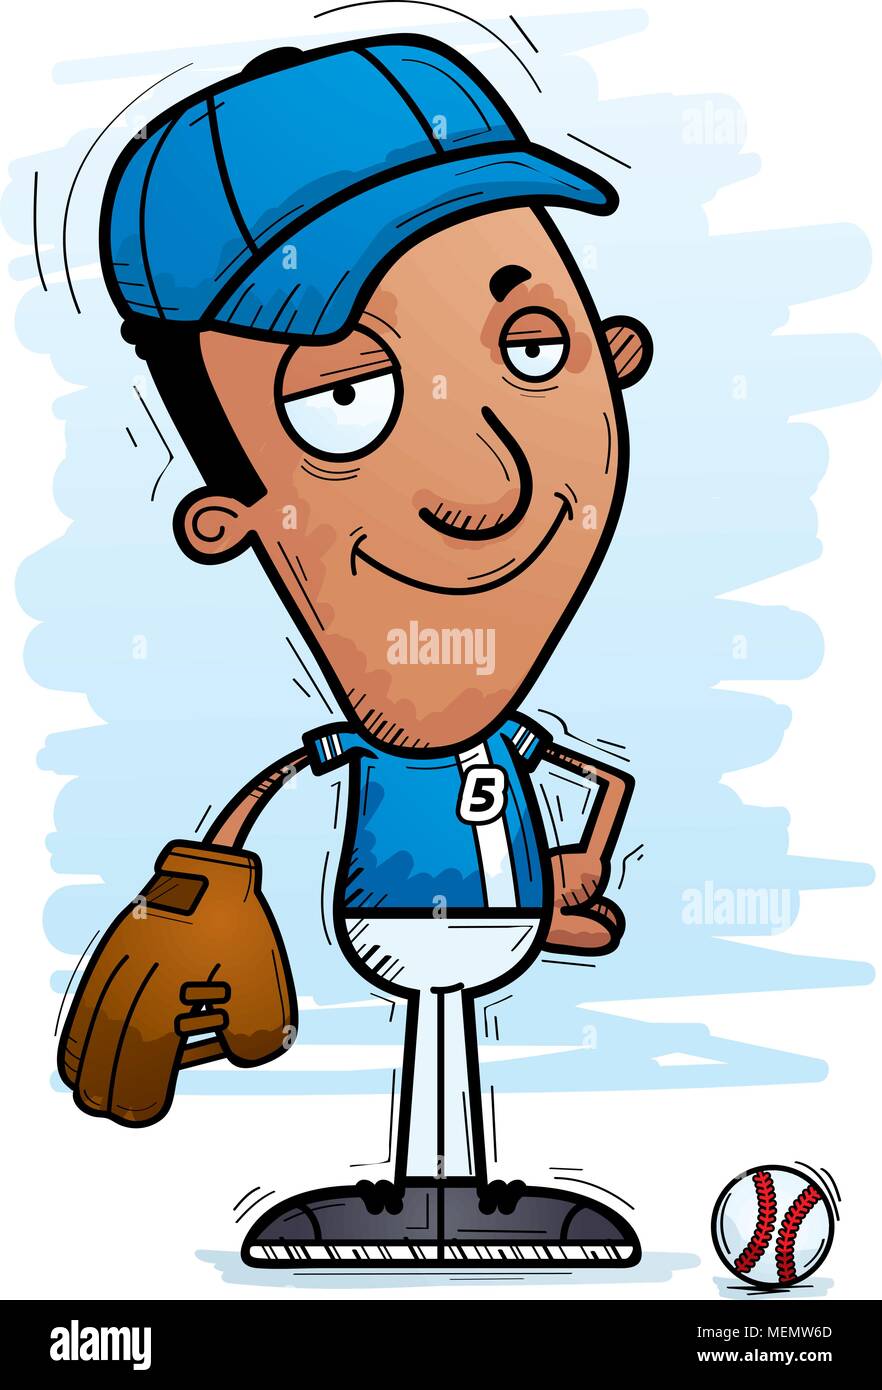 A cartoon illustration of a man baseball player running Stock